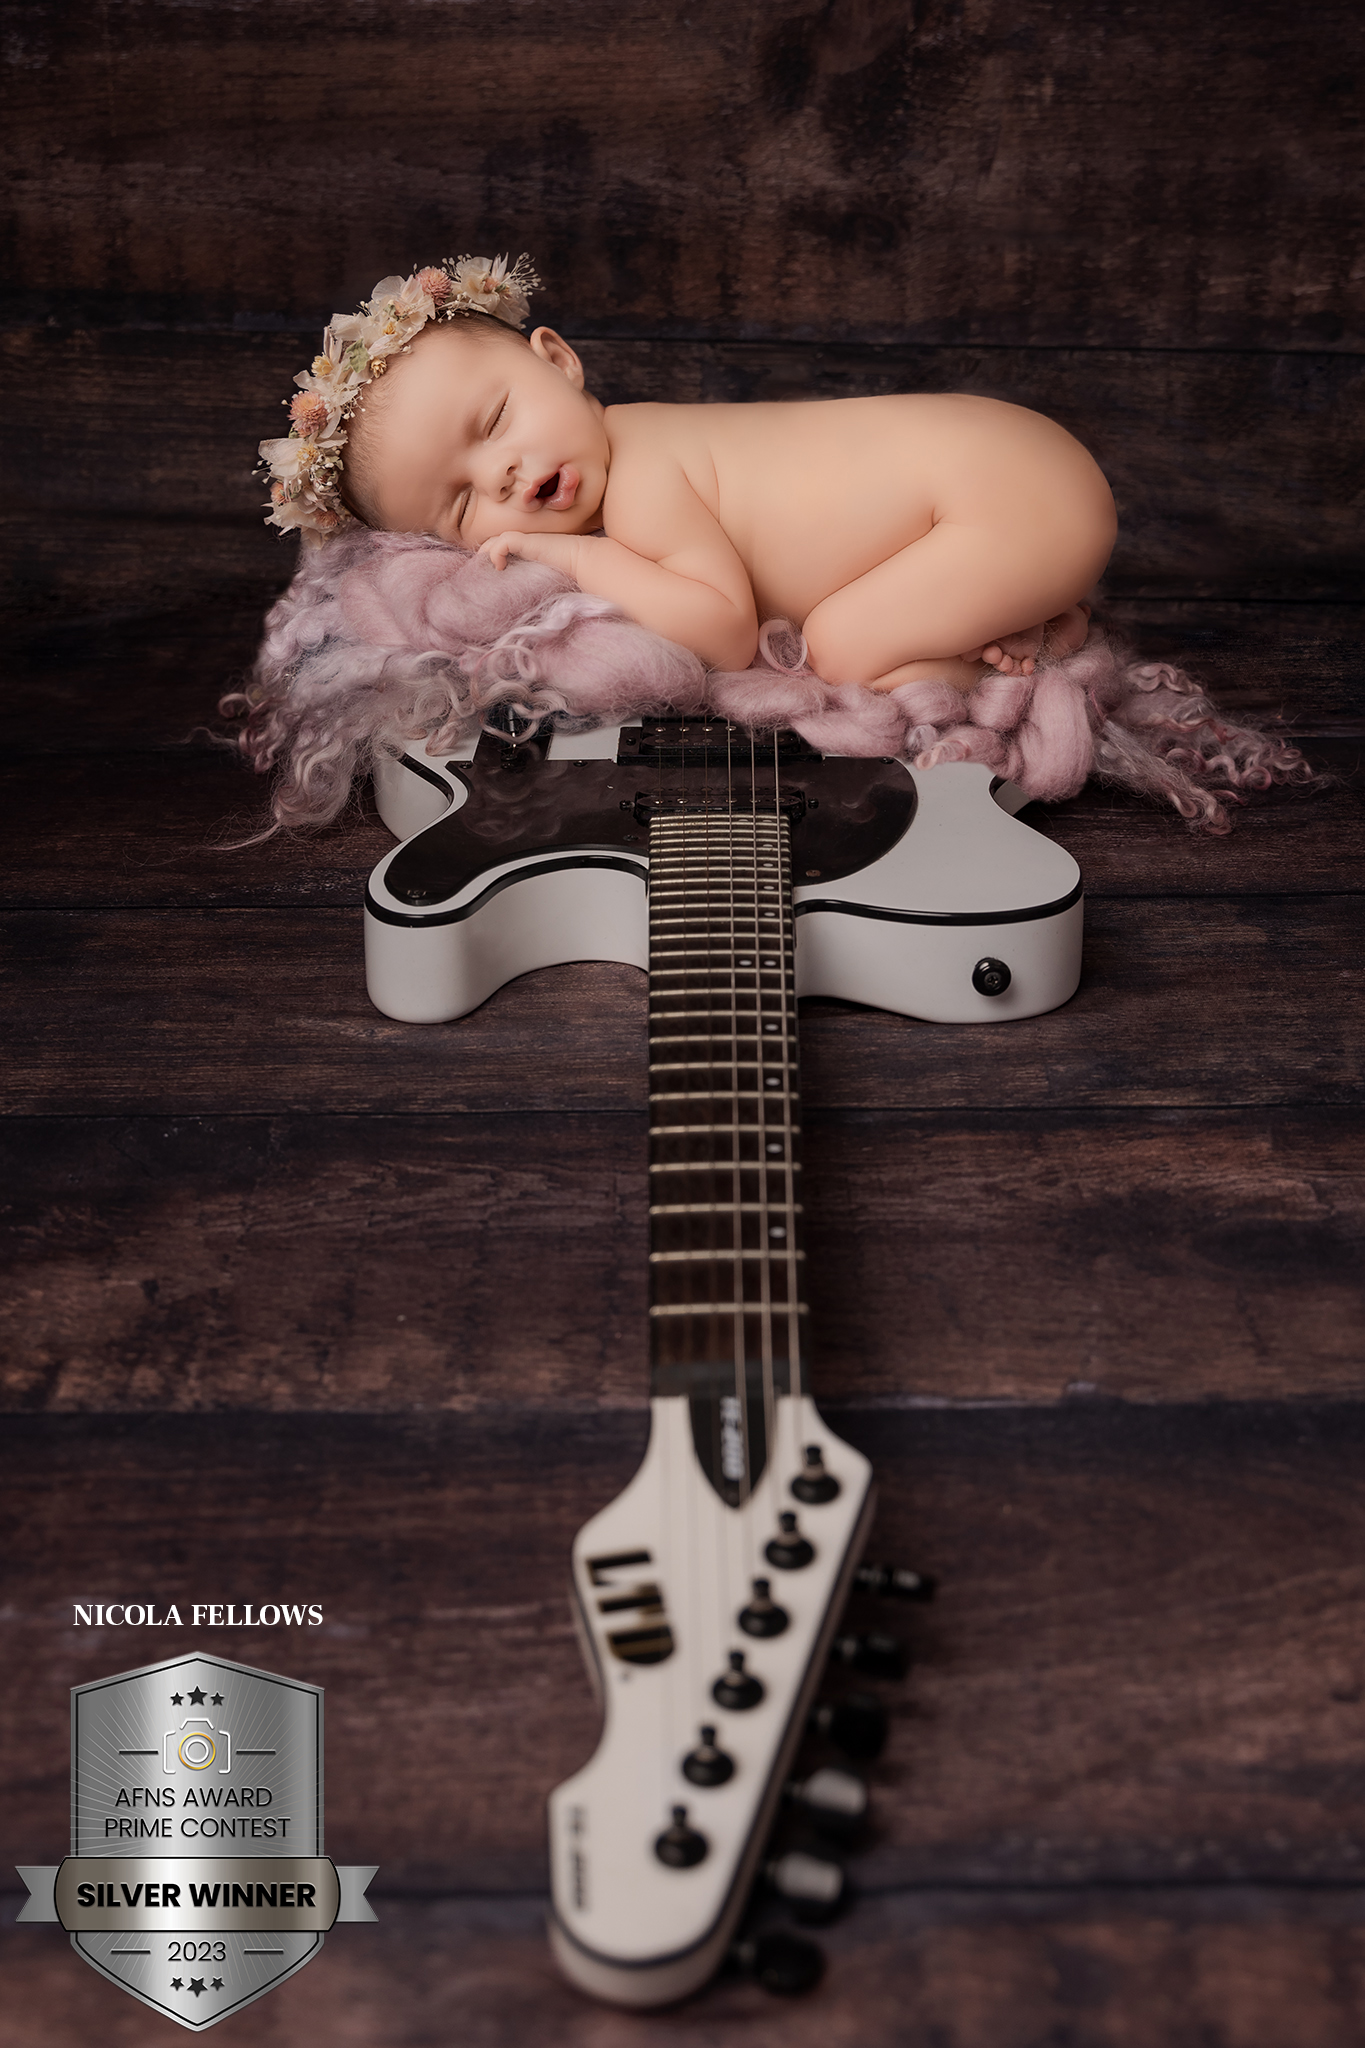 baby on a guitar<br />
newborn photographer sutton coldfield<br />
newborn photographer birmingham